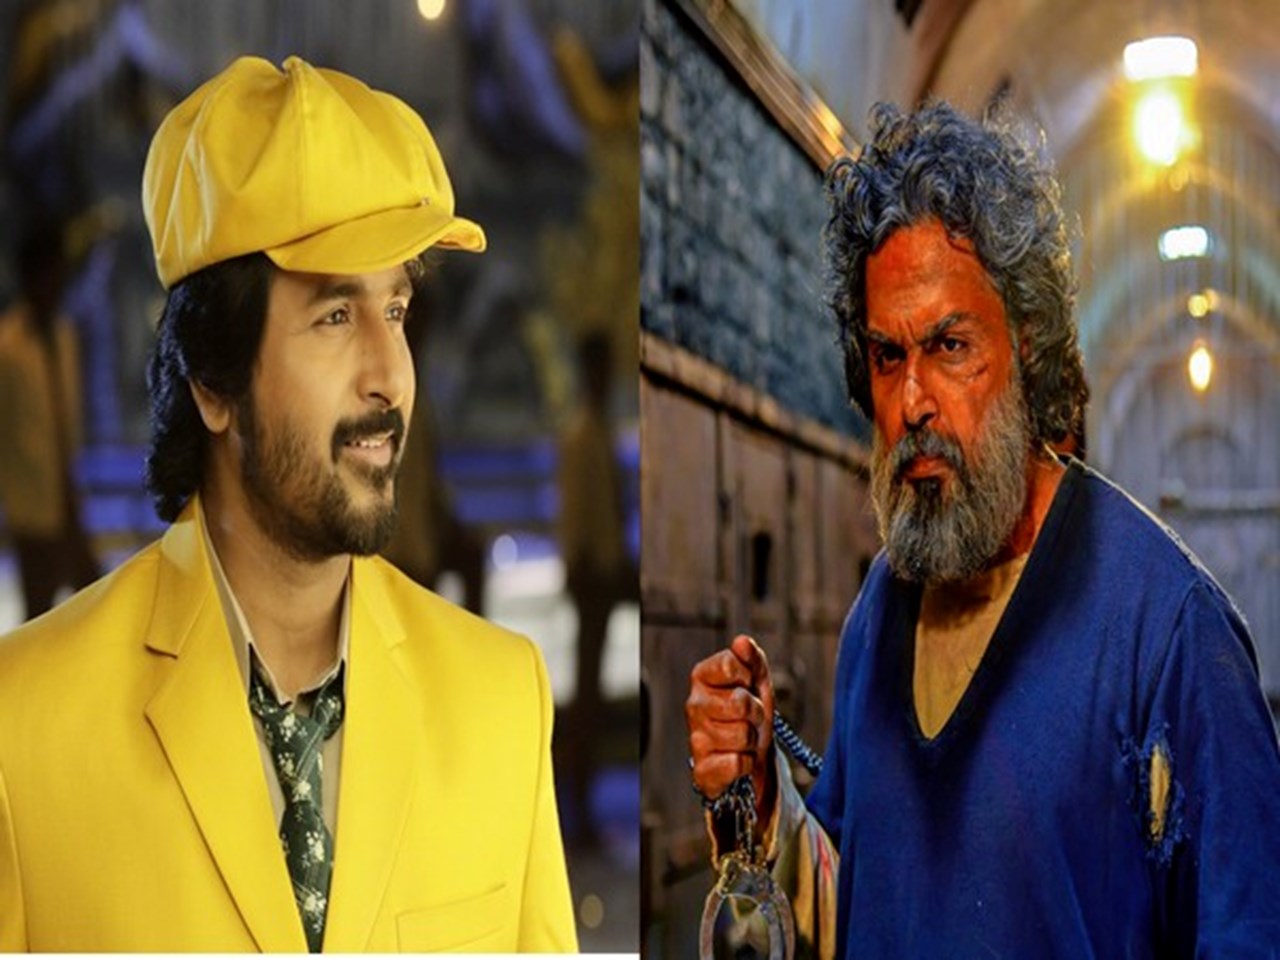 Who is bigger in Tamil cinema history, MGR, Rajinikanth, or Vijay? - Quora